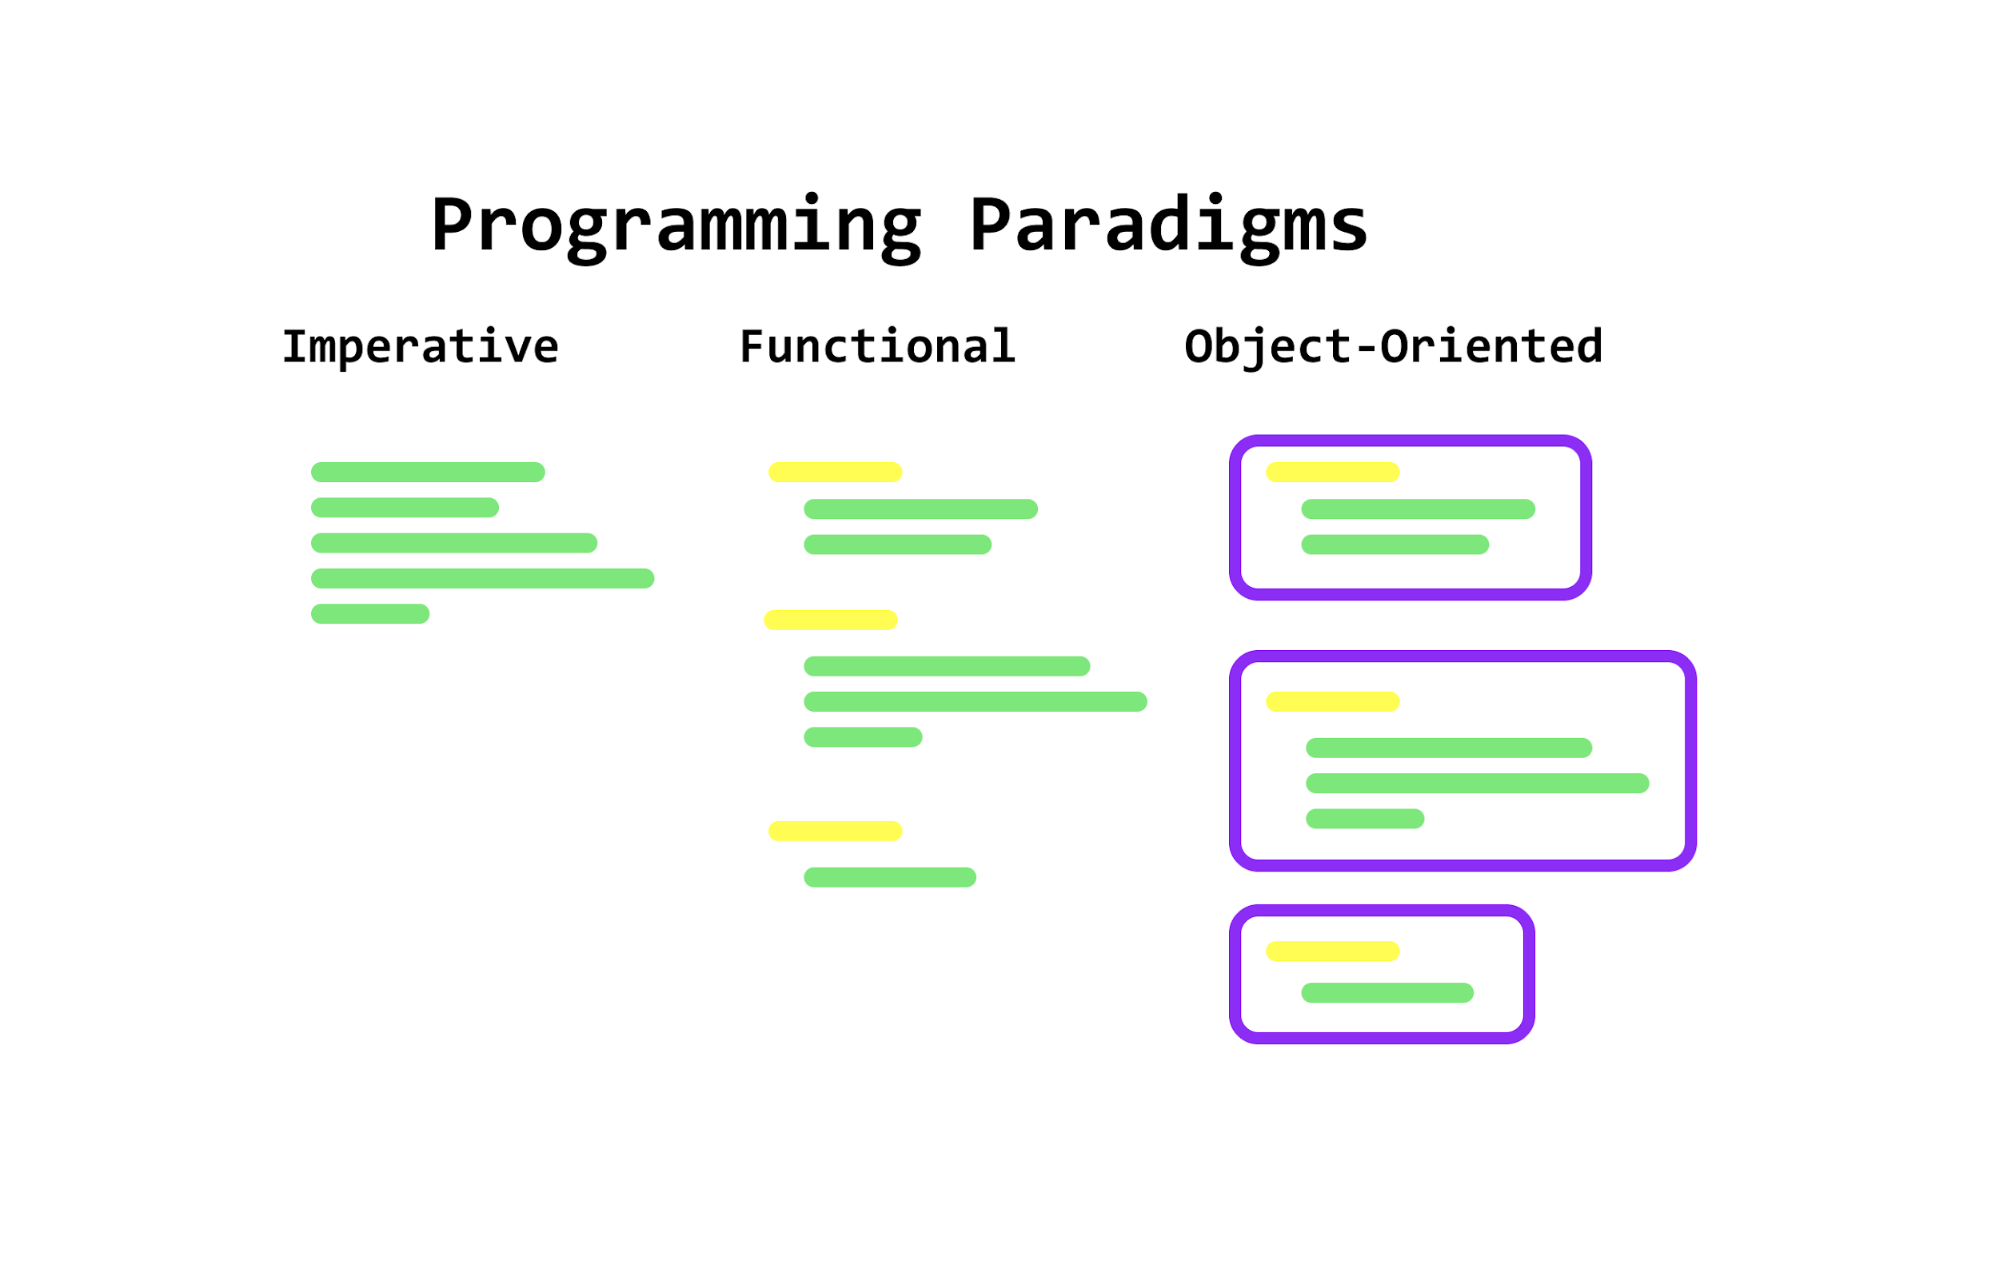 OO programming